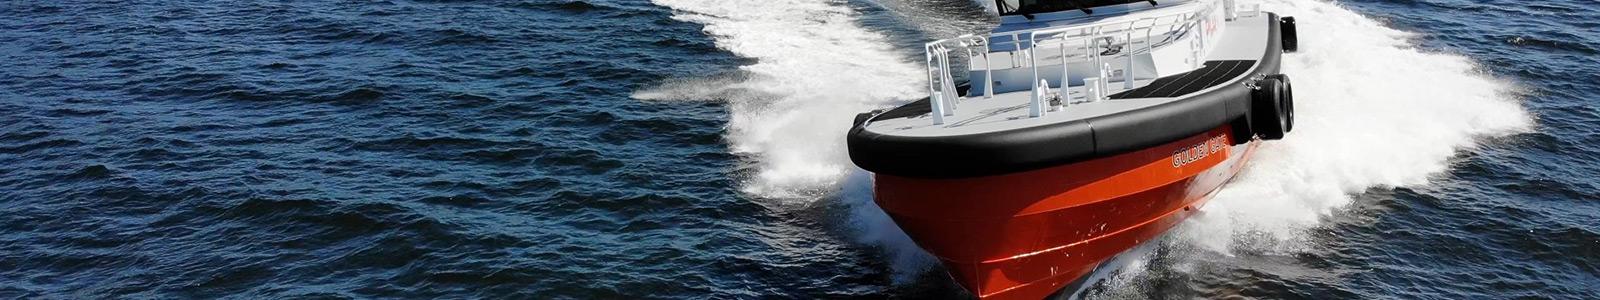 Fender system for Snow Boat Building - SFBP Pilot vessel 